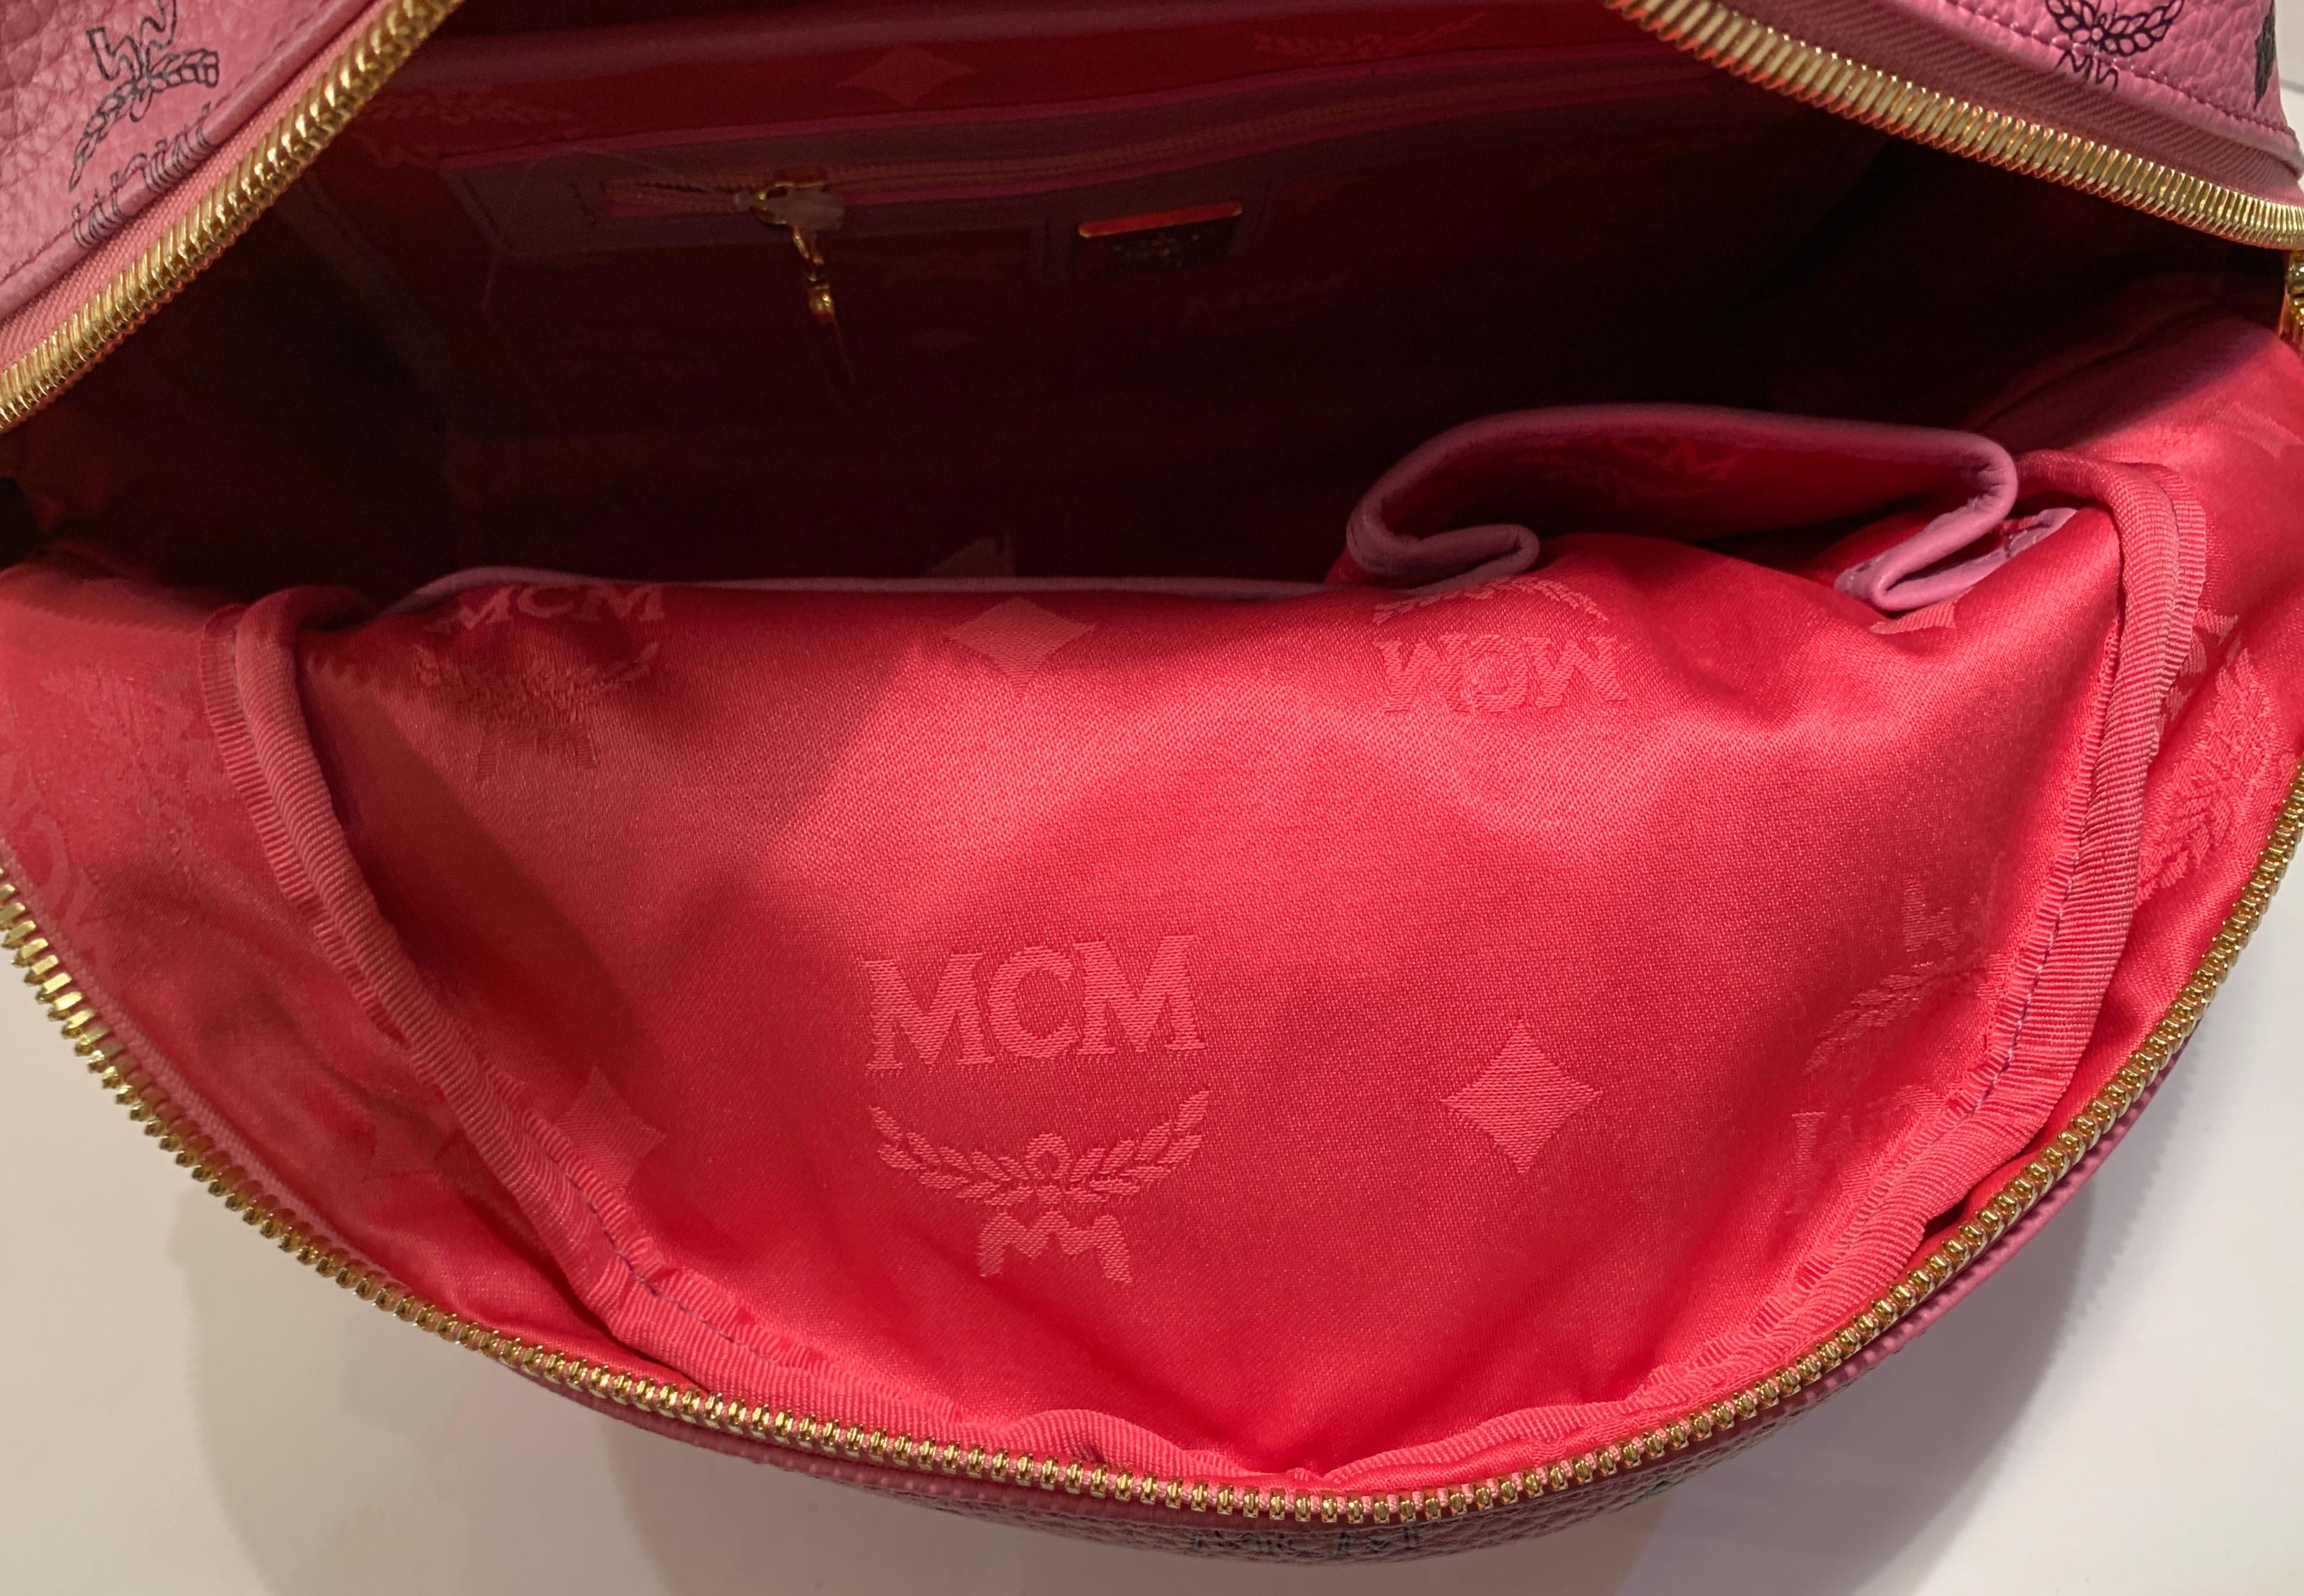 MCM Worldwide Medium Stark Backpack Pink and Black Visetos with Gold ...